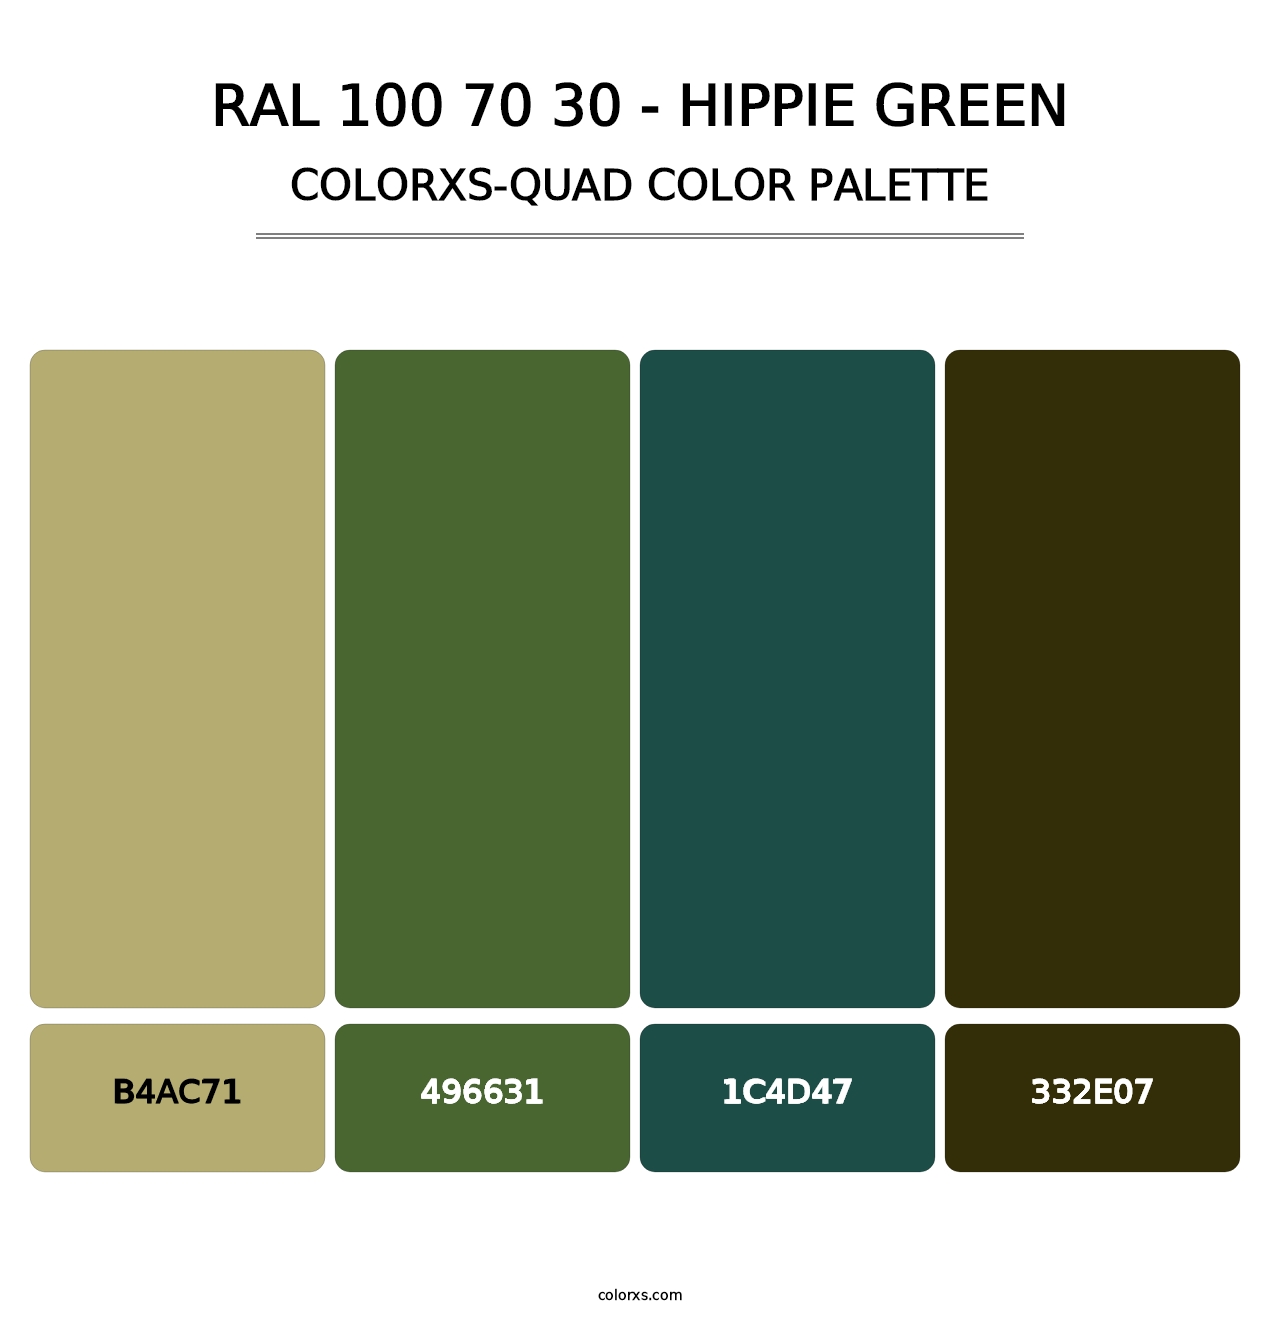 RAL 100 70 30 - Hippie Green - Colorxs Quad Palette